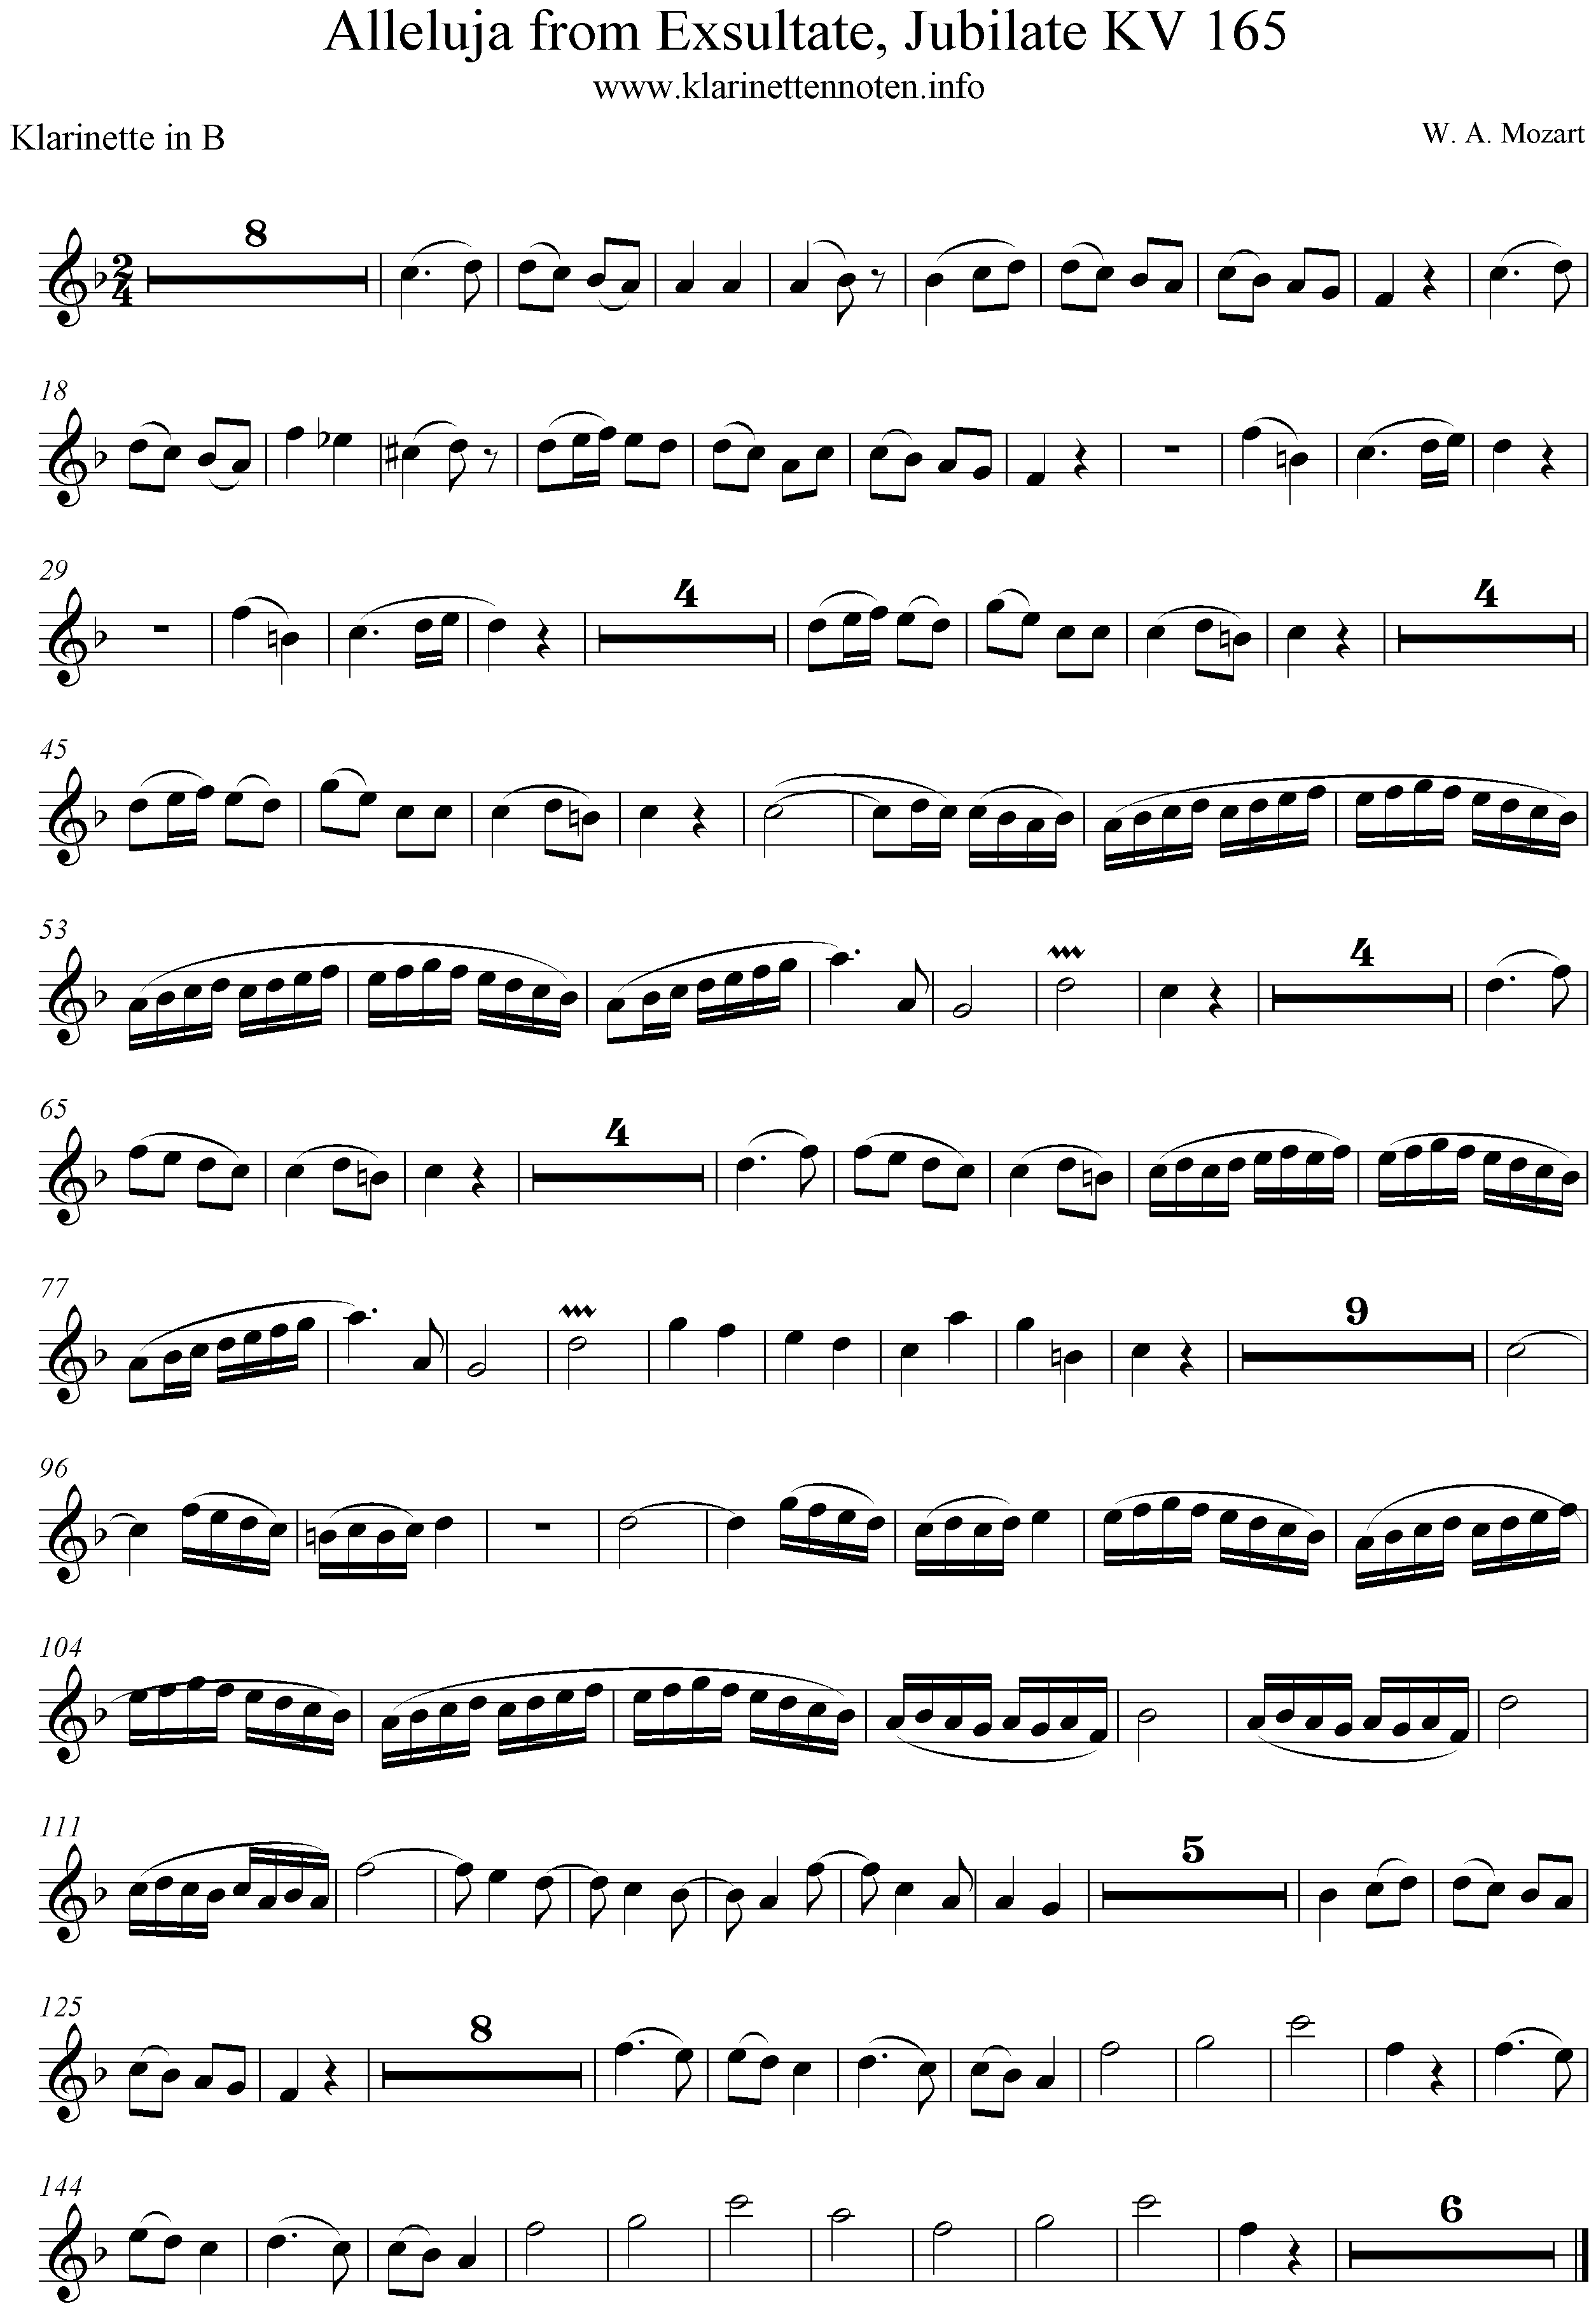 Alleluja KV 165 Klarinette, Clarinet